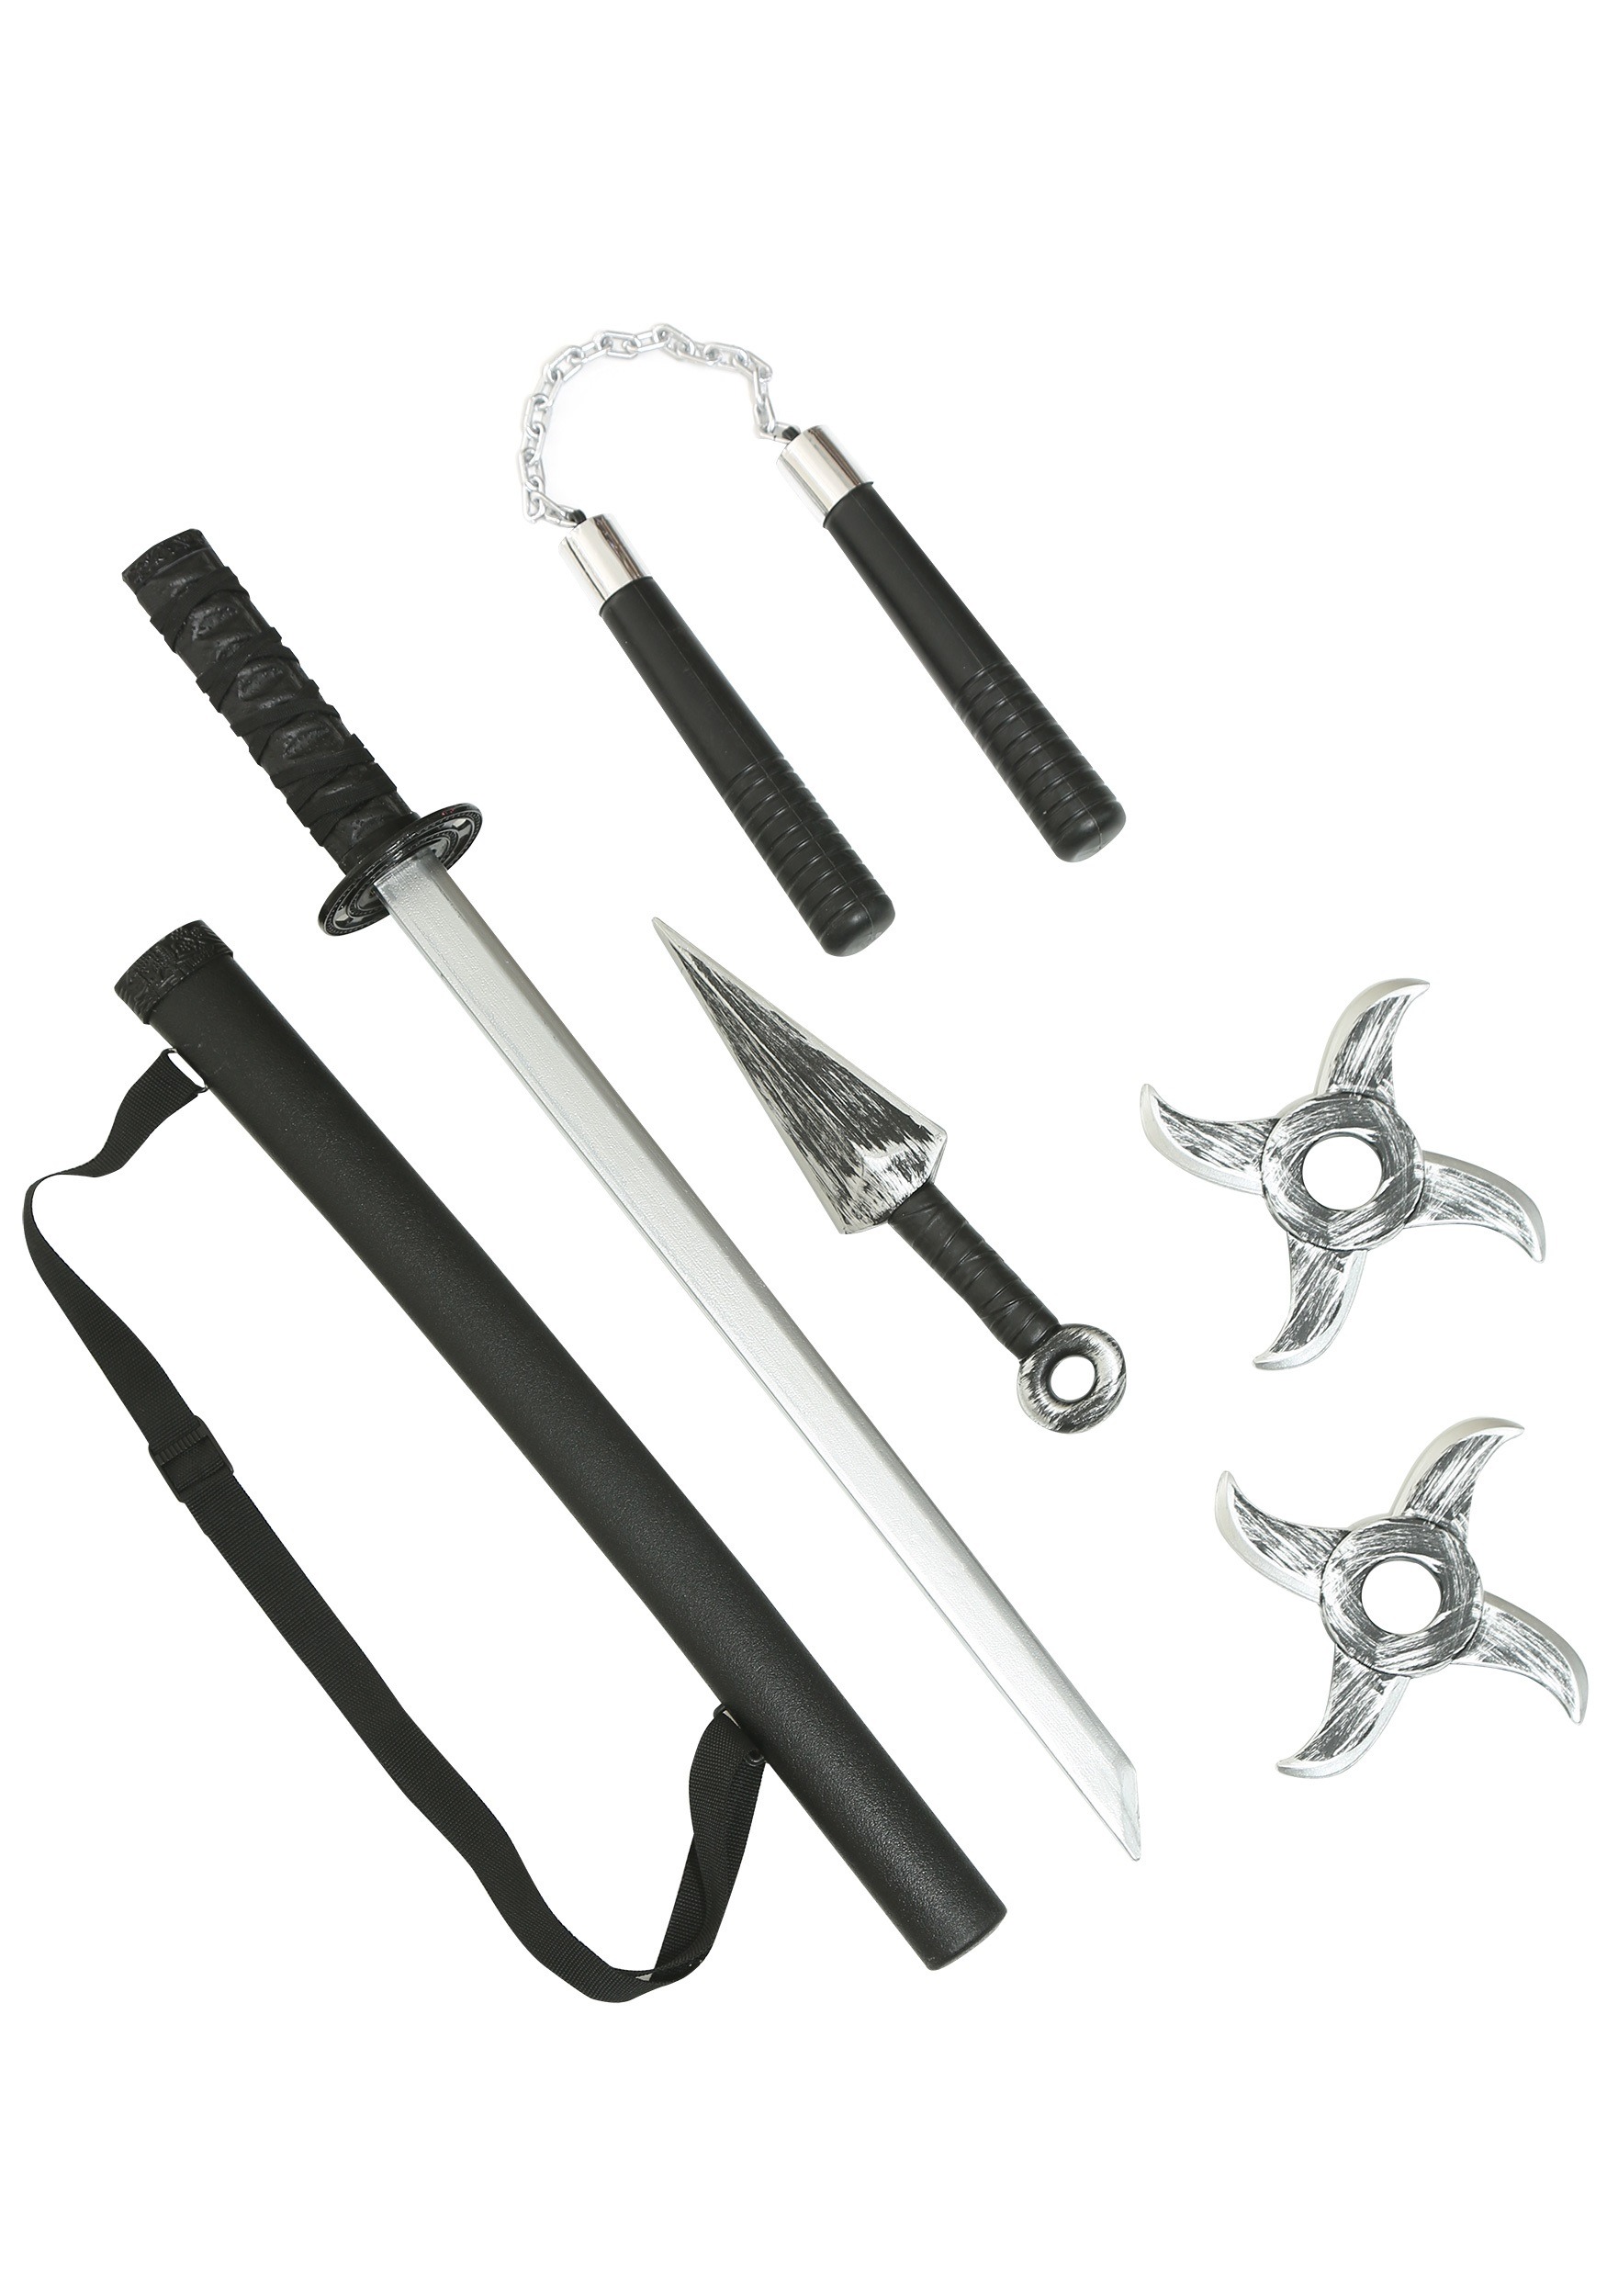 Kid's Ninja Toy Weapons Kit